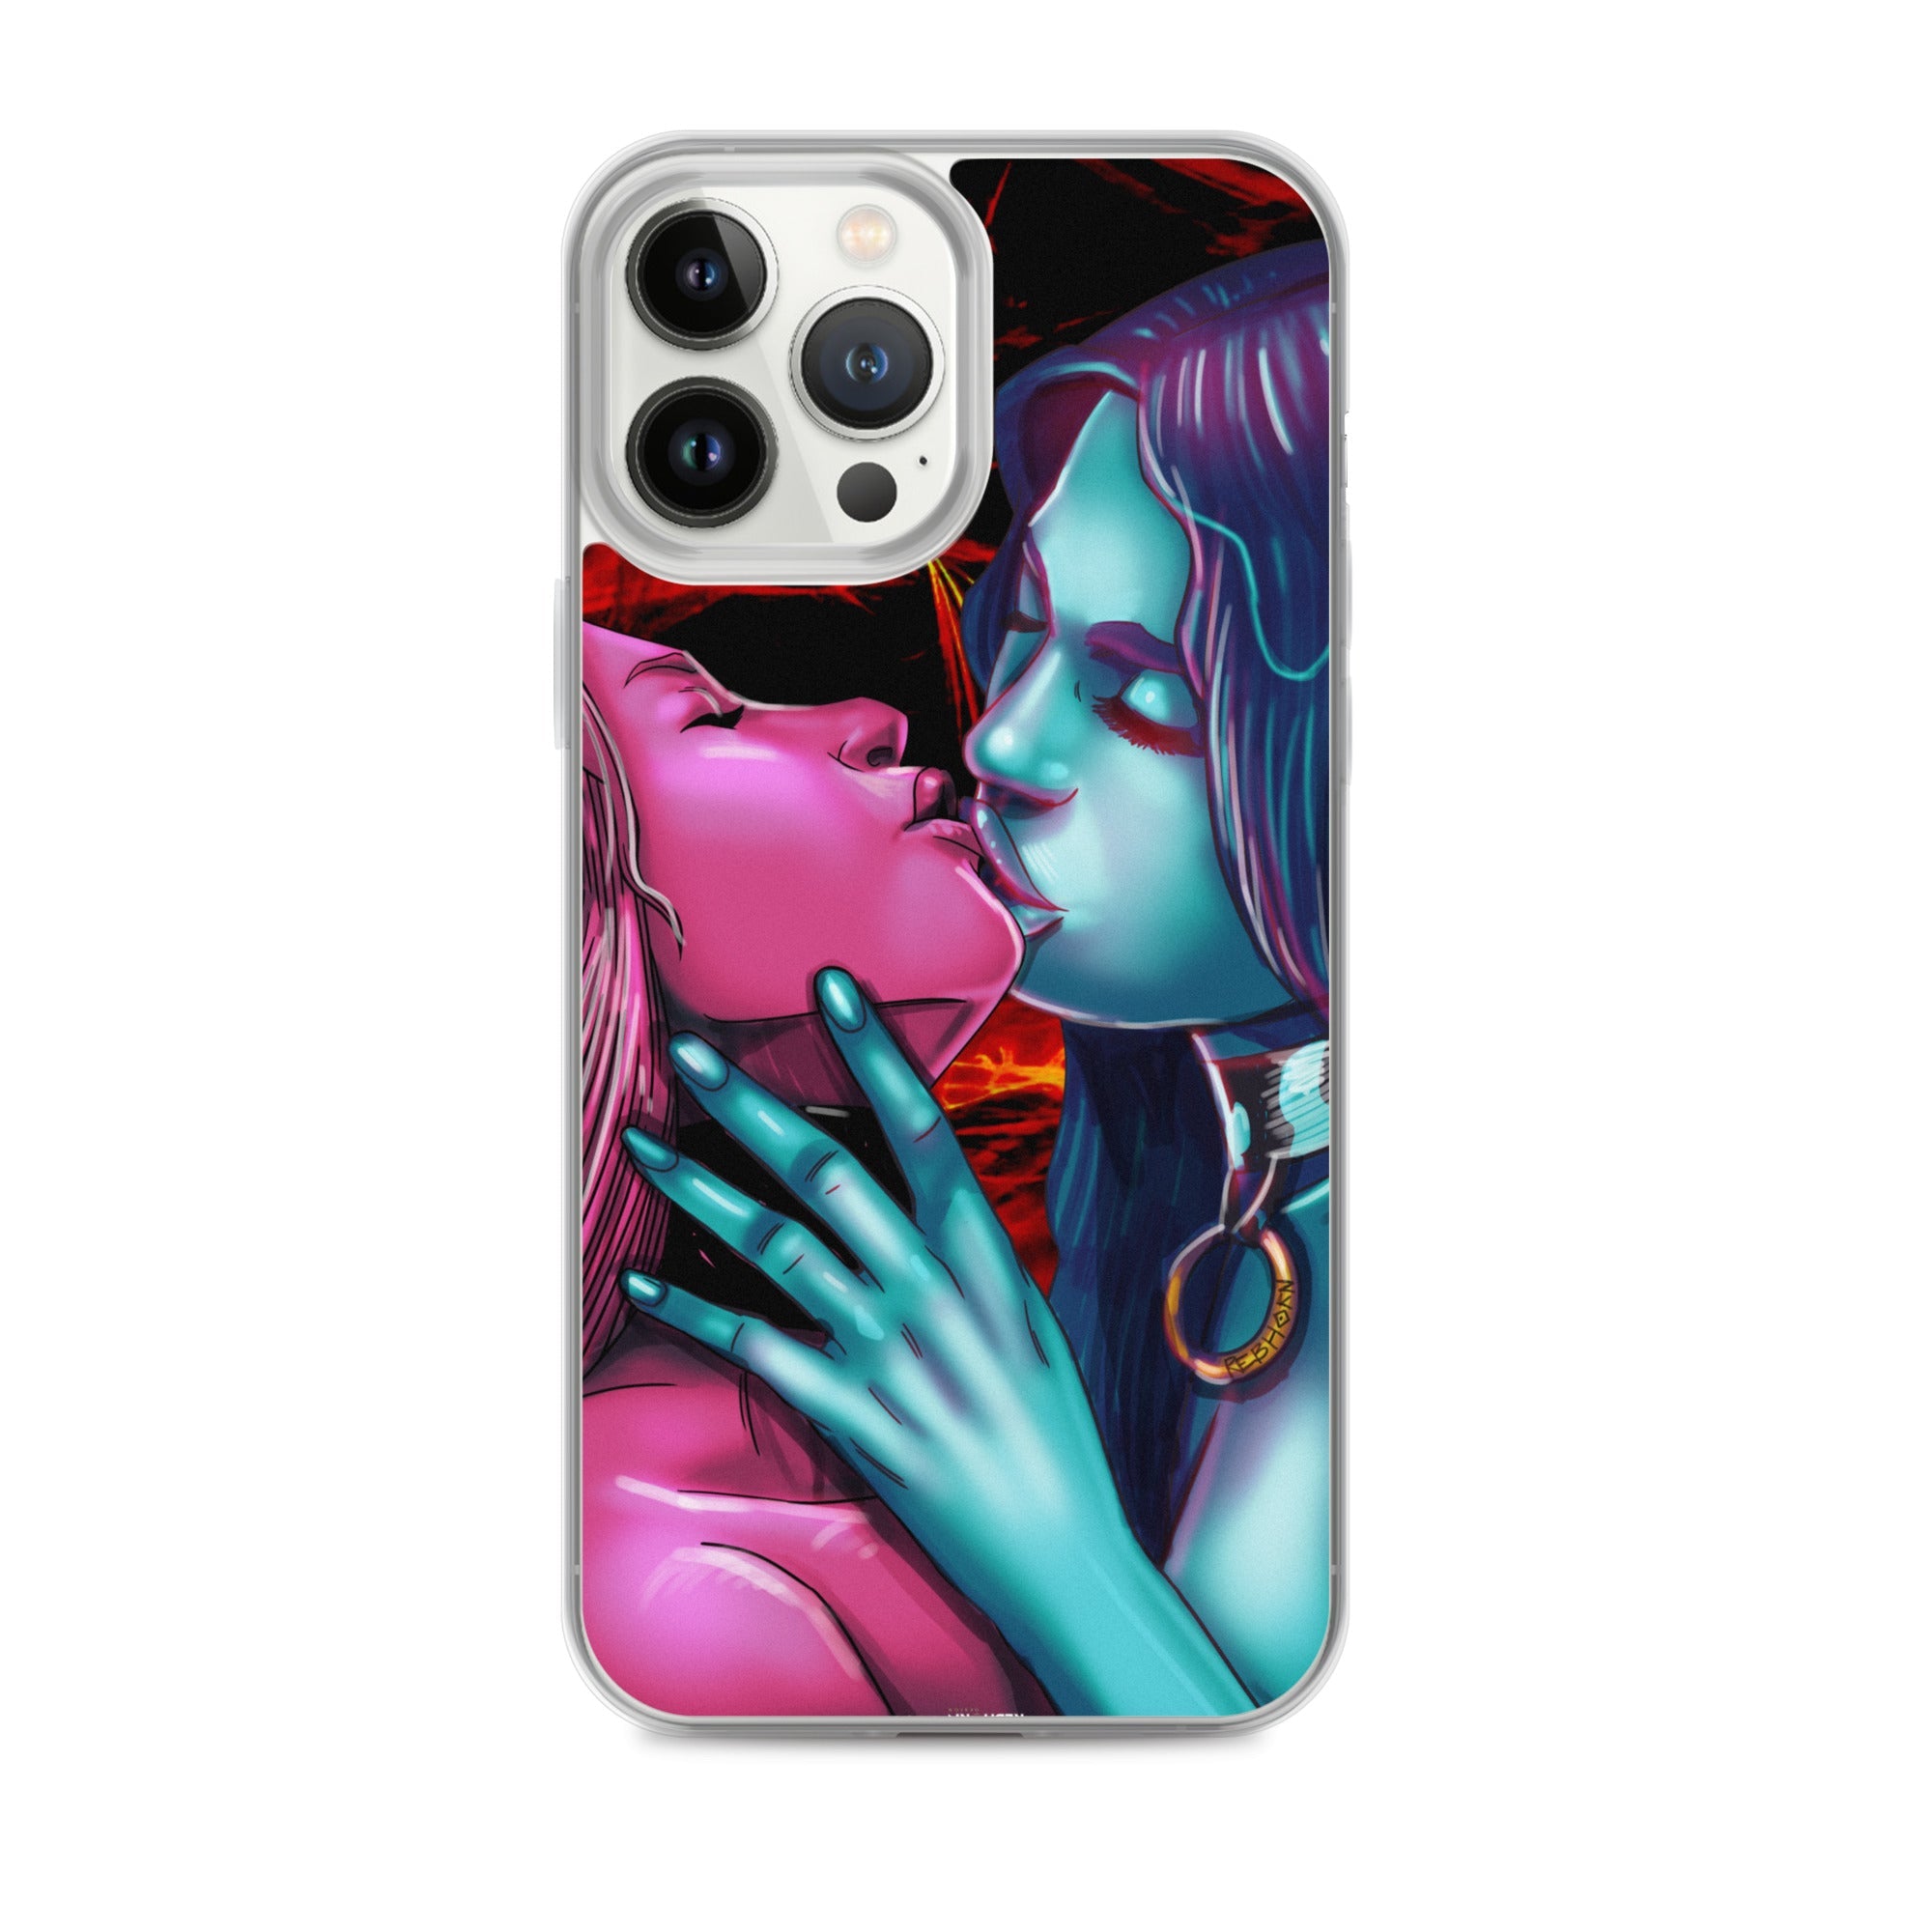 Erotica Be My Playdate iPhone Case - REBHORN DESIGN